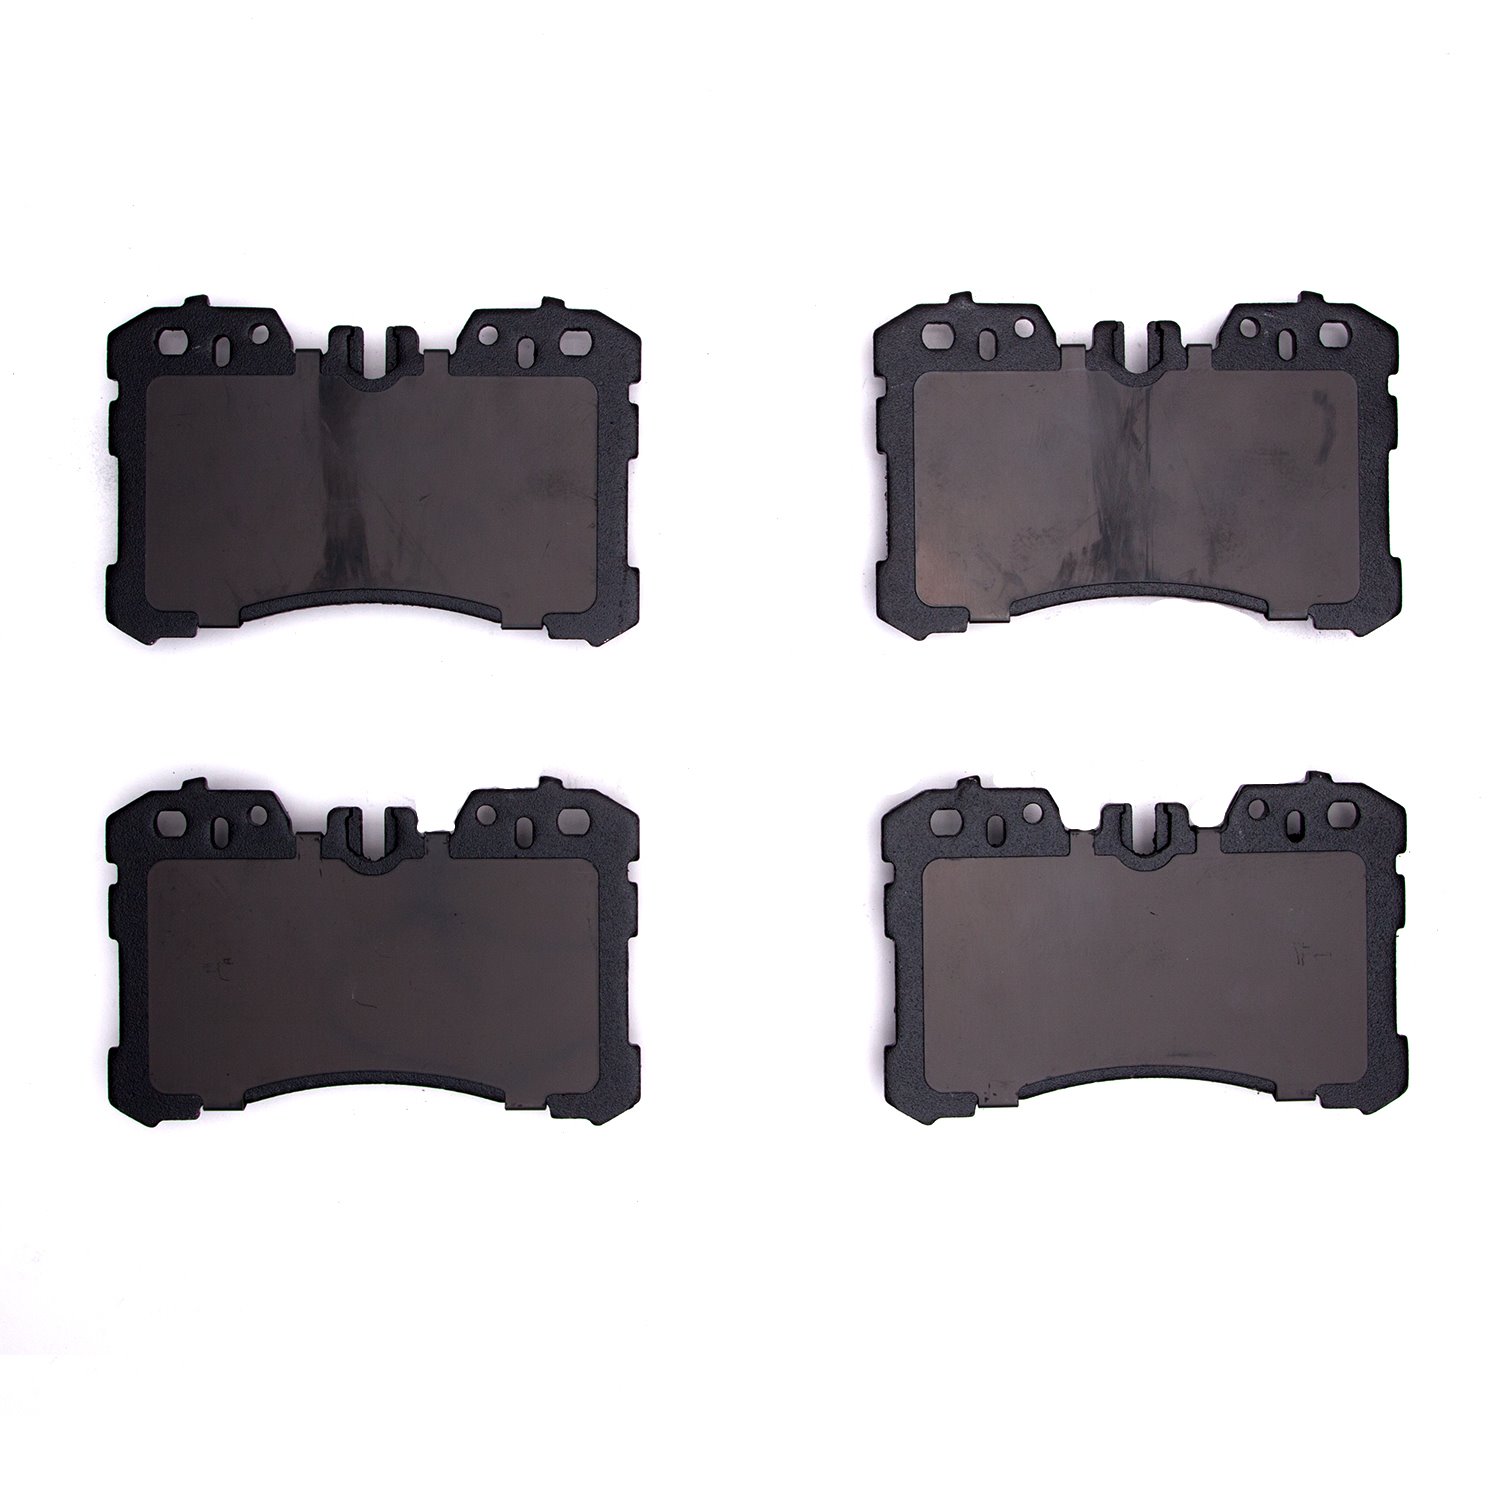 1310-1282-00 3000-Series Ceramic Brake Pads, Fits Select Lexus/Toyota/Scion, Position: Front